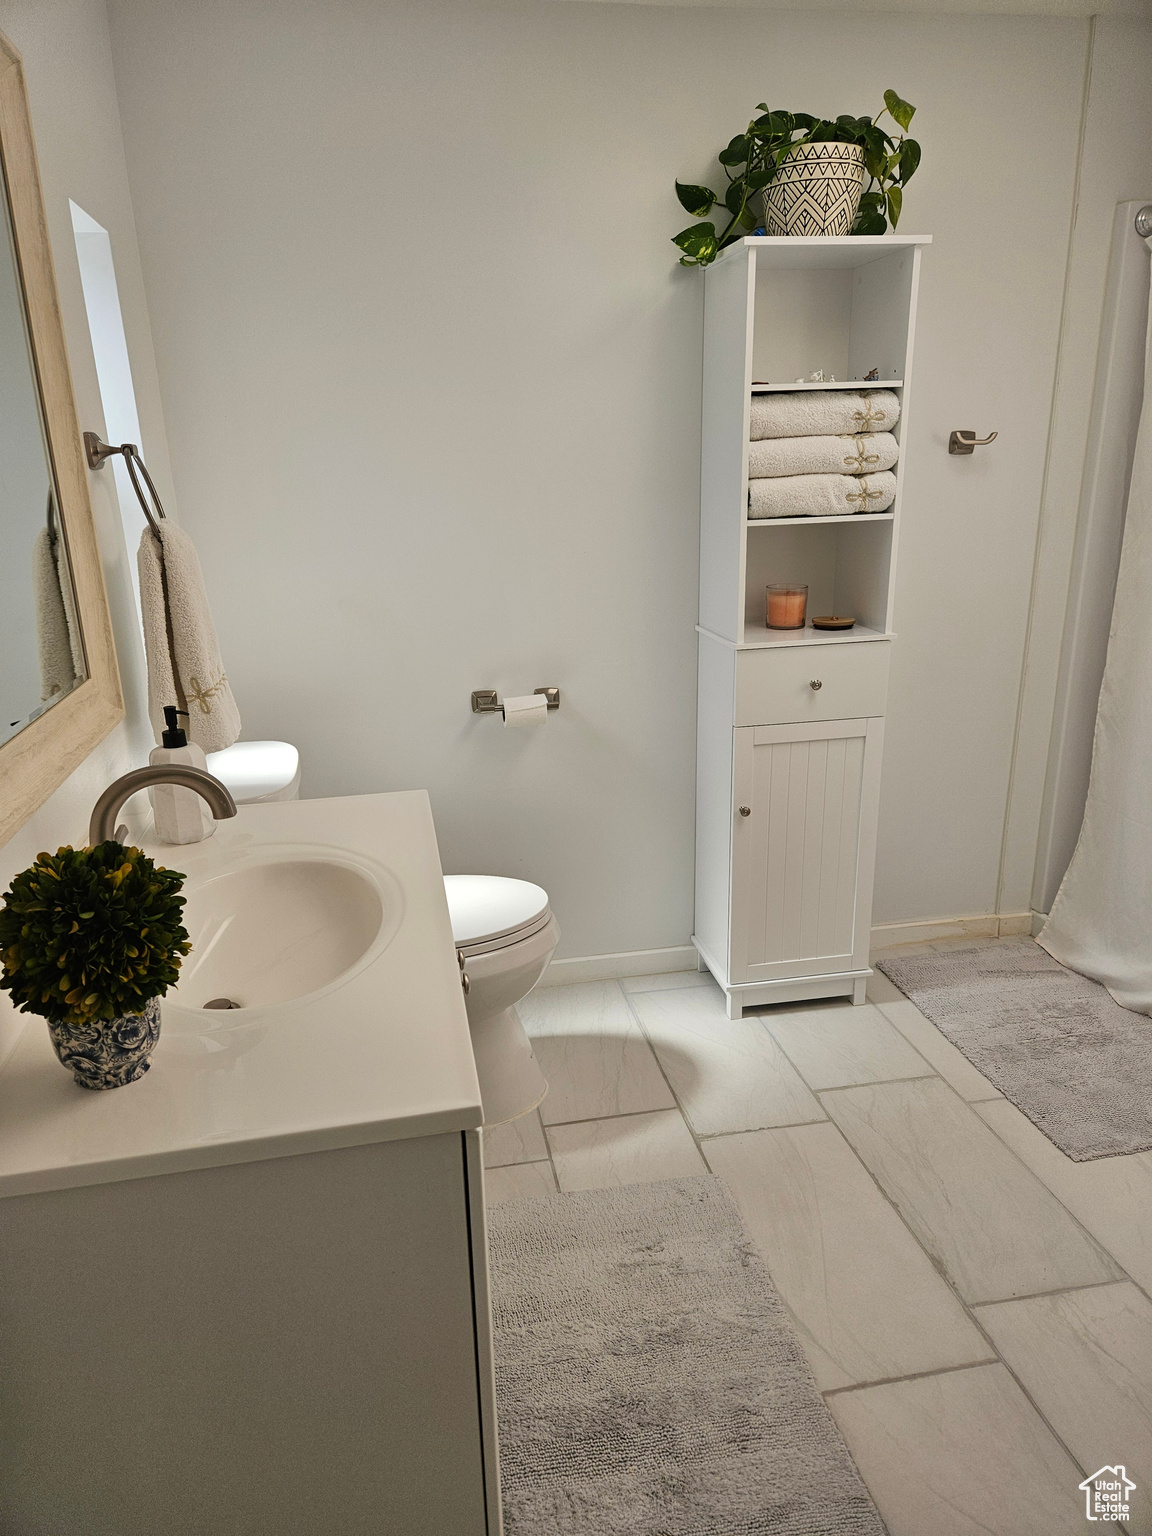 Bathroom with vanity, toilet, and tile flooring